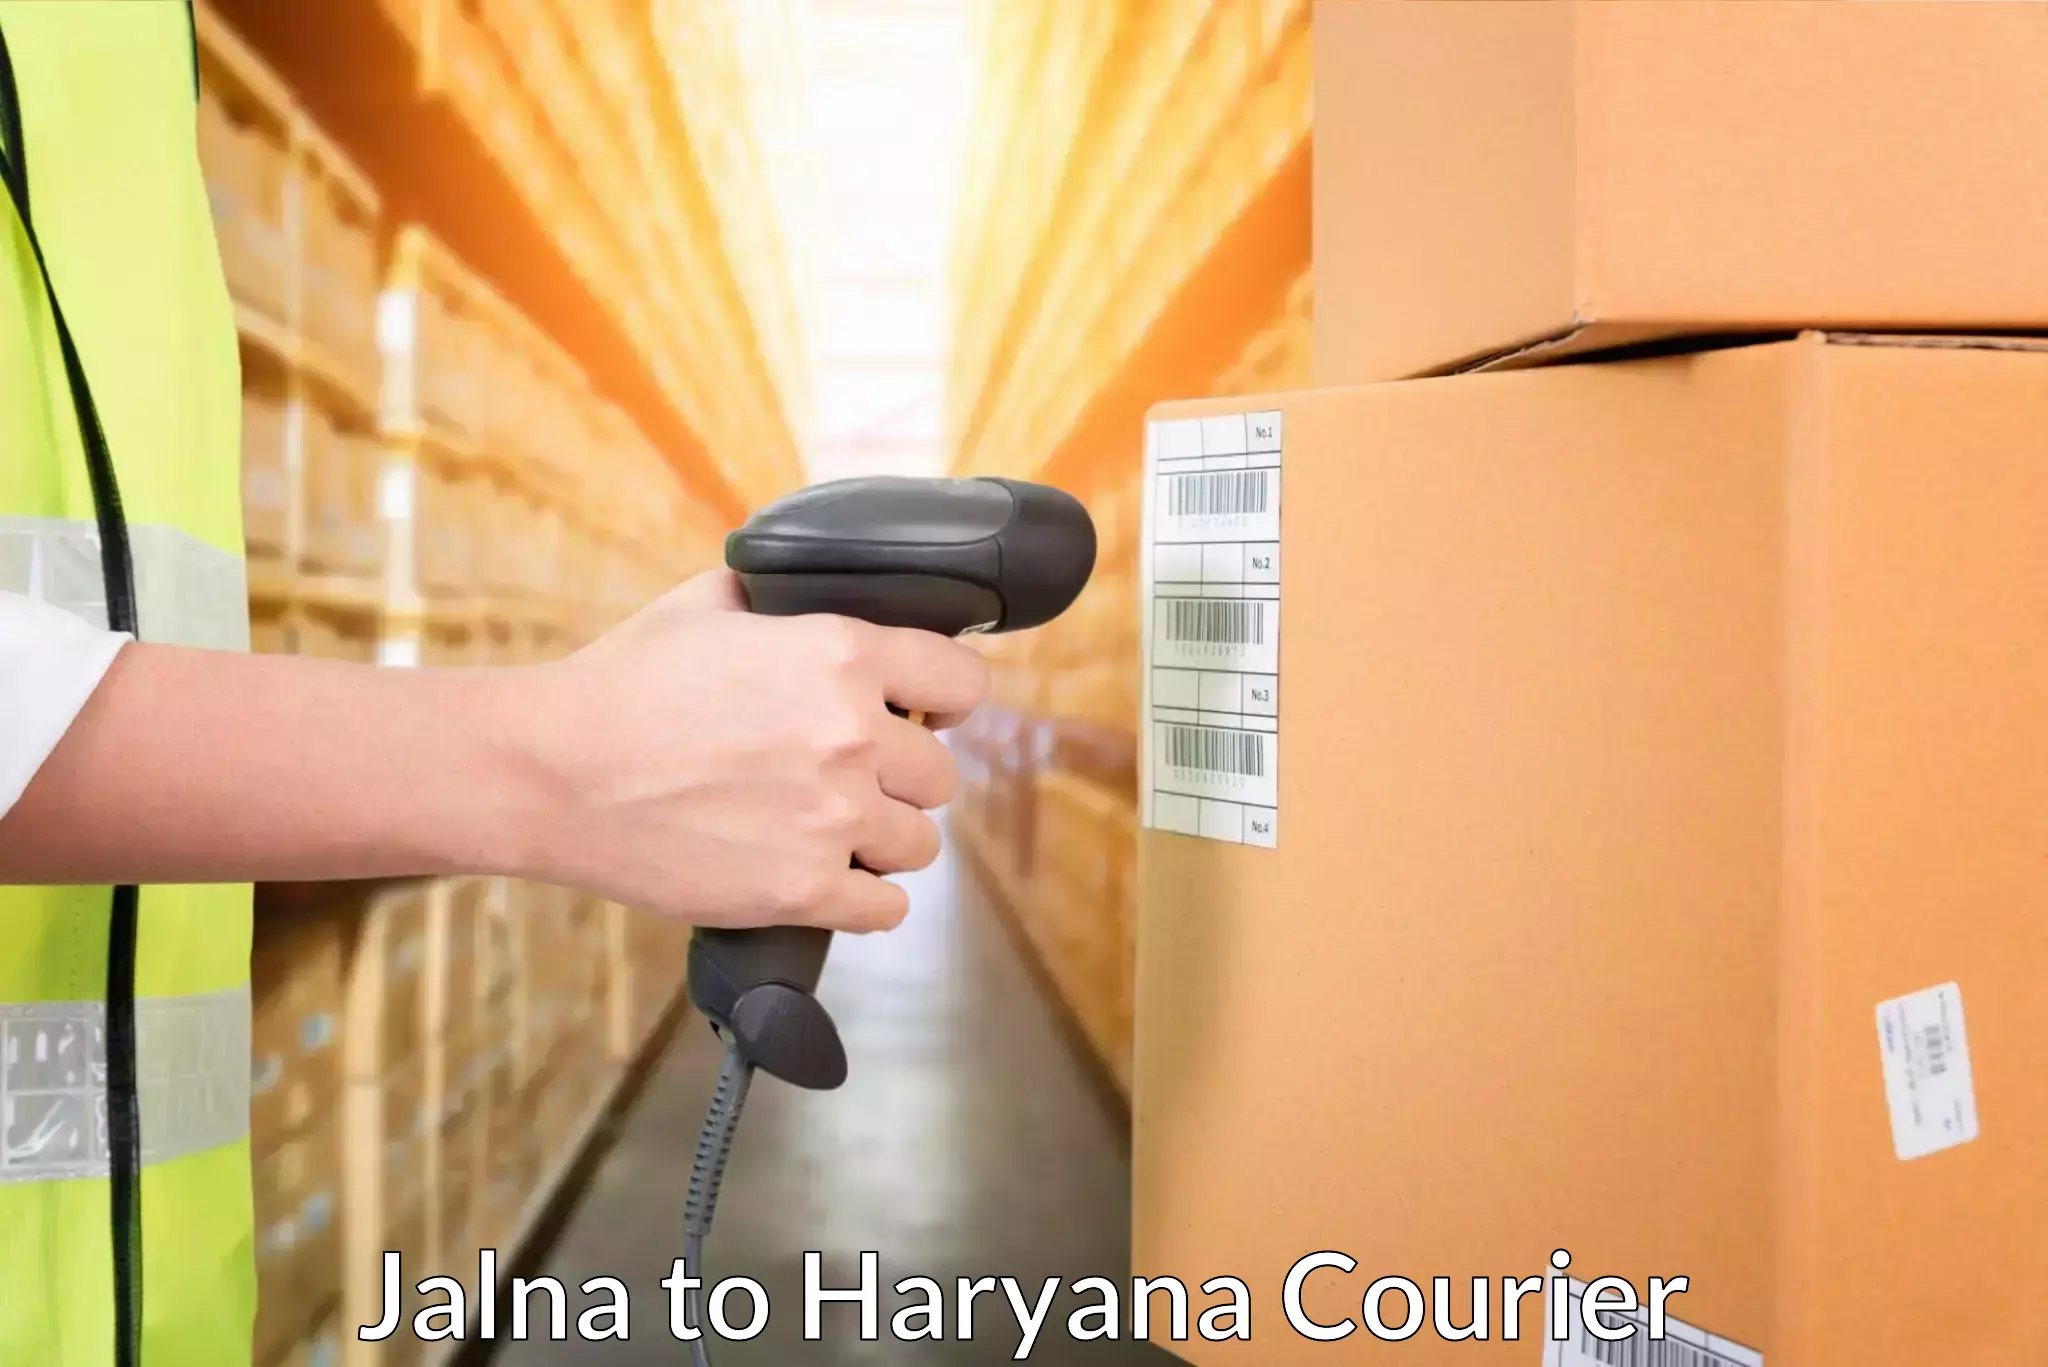 Courier service comparison Jalna to Bhiwani